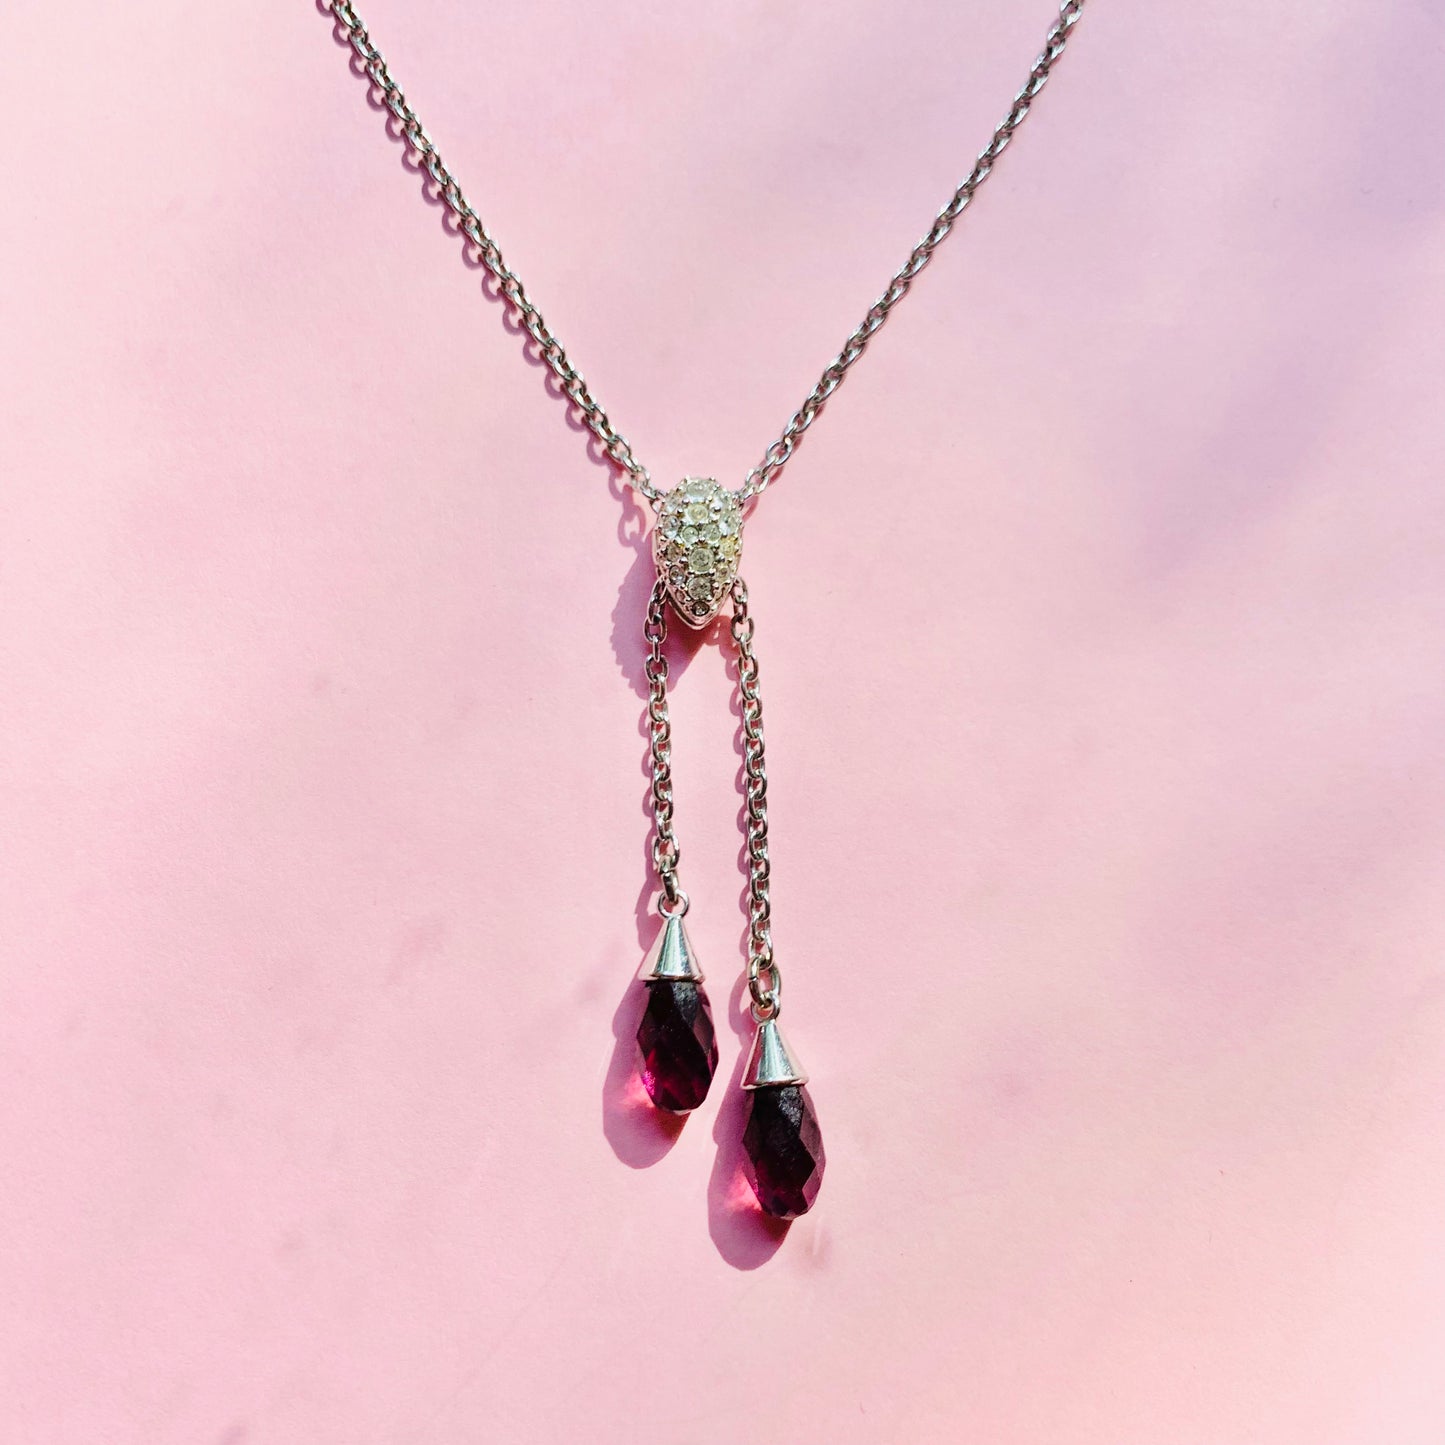 Vintage Swarovski silver costume necklace with purple crystal drop pendant